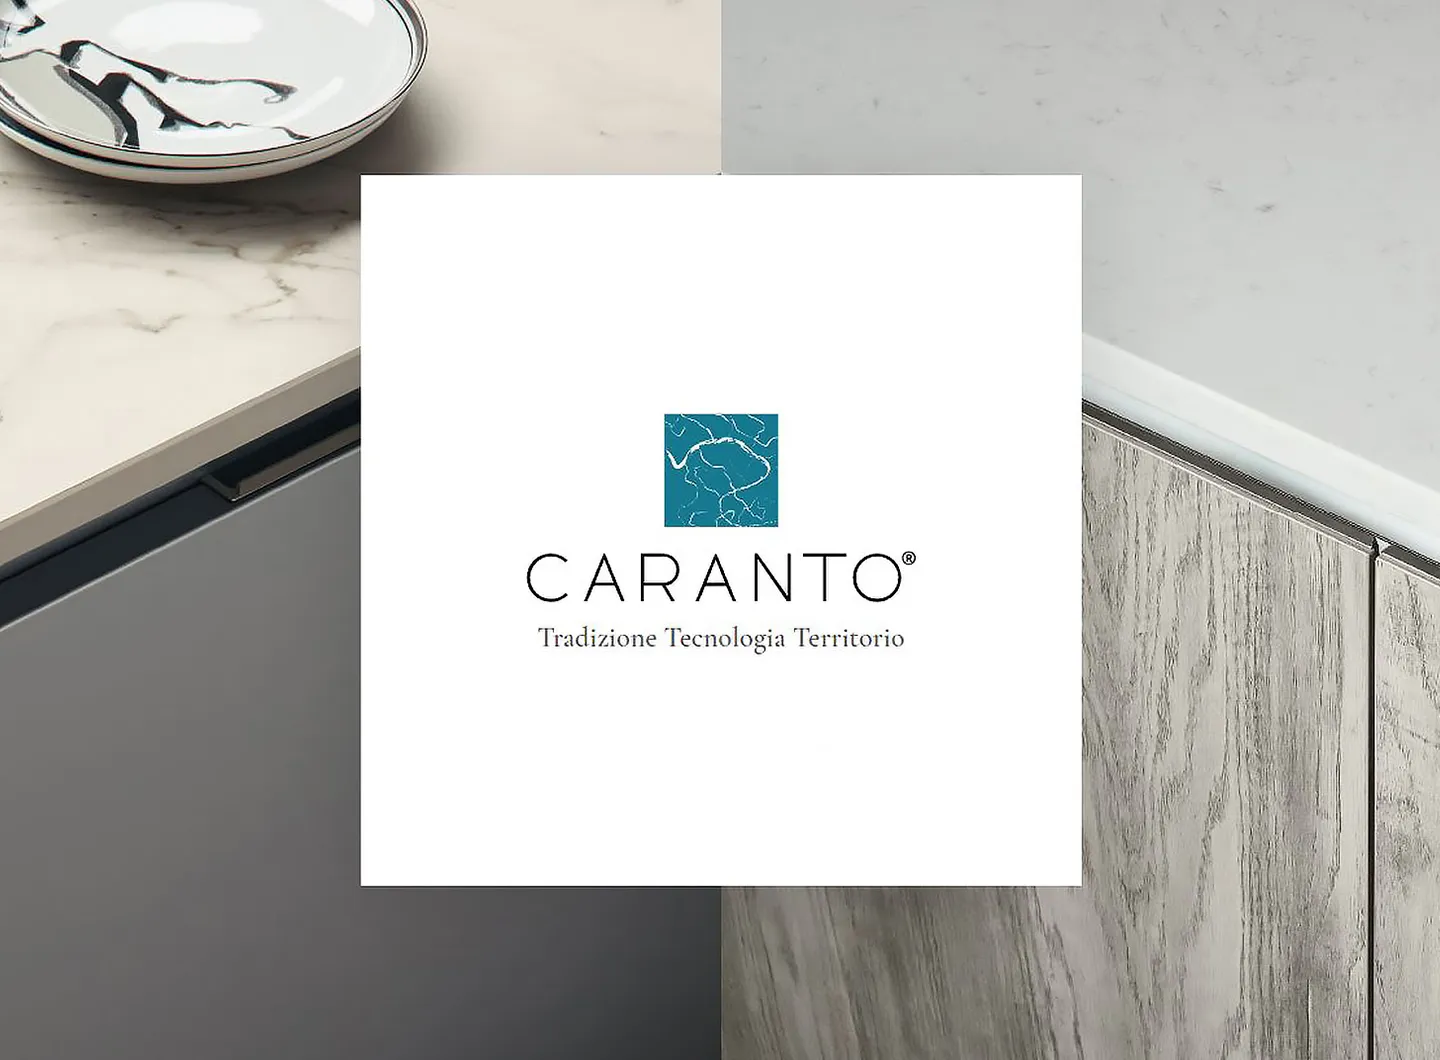 Visit the Caranto website for more information.